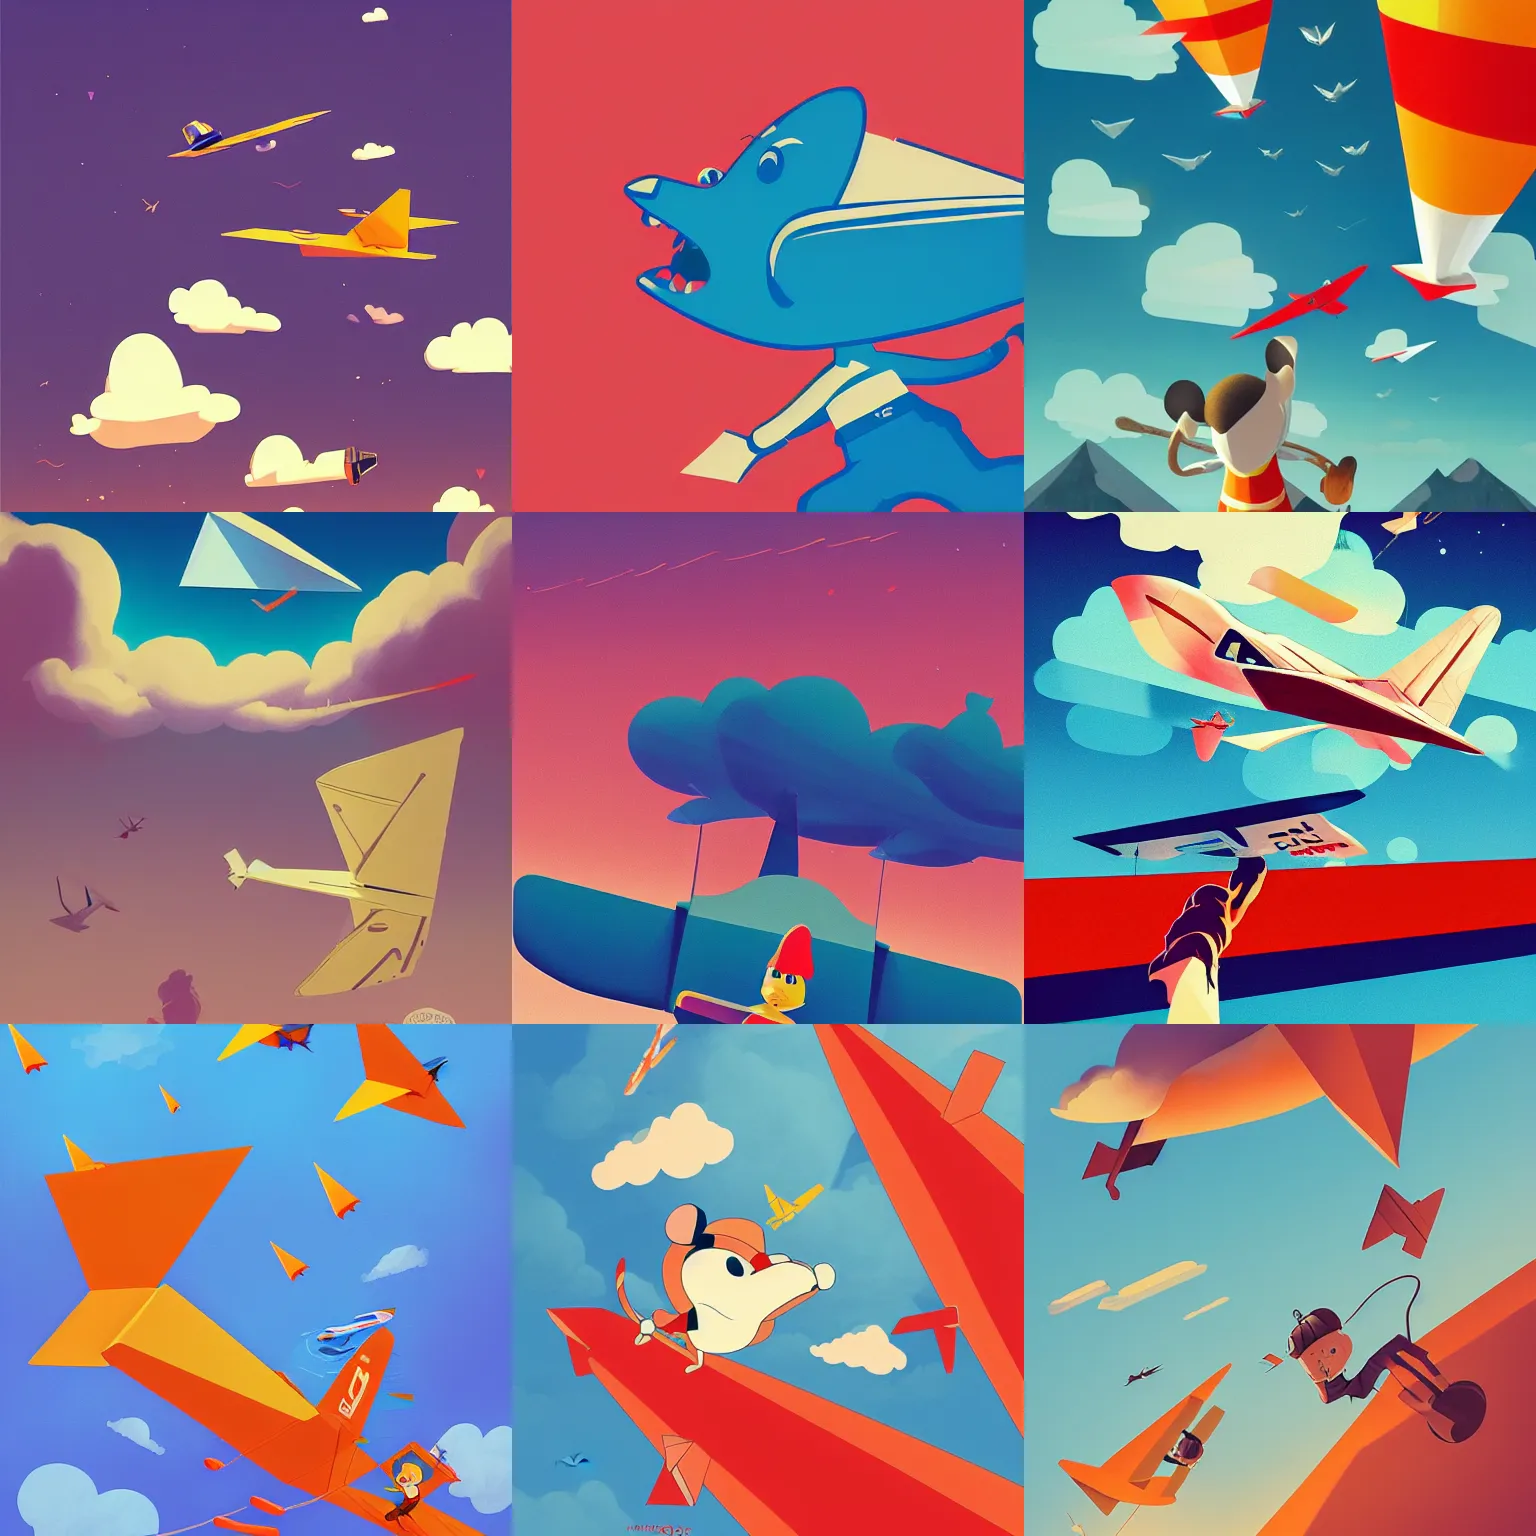 Prompt: pilot mouse in paper plane, movie poster, flying, sky, clouds, paper airplane, mice, atmospheric, full of color, illustration by James Jean, Loish Van Baarle, Ilya Kuvshinov, Disney, Pixar